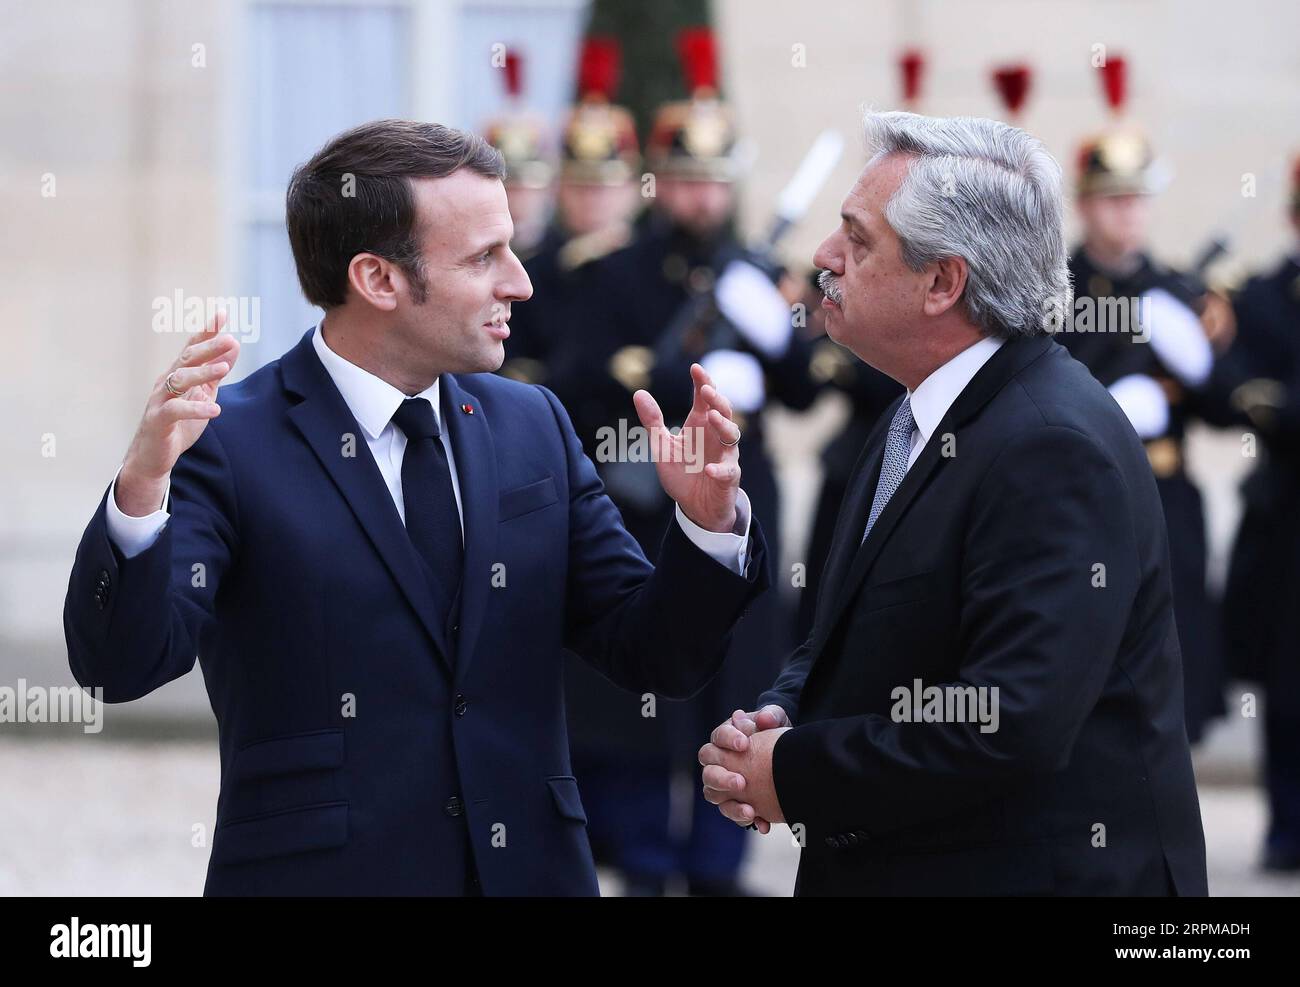 200205 -- PARIGI, 5 febbraio 2020 -- il presidente francese Emmanuel Macron L incontra il presidente argentino Alberto Fernandez in visita all'Elysee Palace di Parigi, in Francia, 5 febbraio 2020. FRANCE-PARIS-MACRON-FERNANDEZ-MEETING GaoxJing PUBLICATIONxNOTxINxCHN Foto Stock